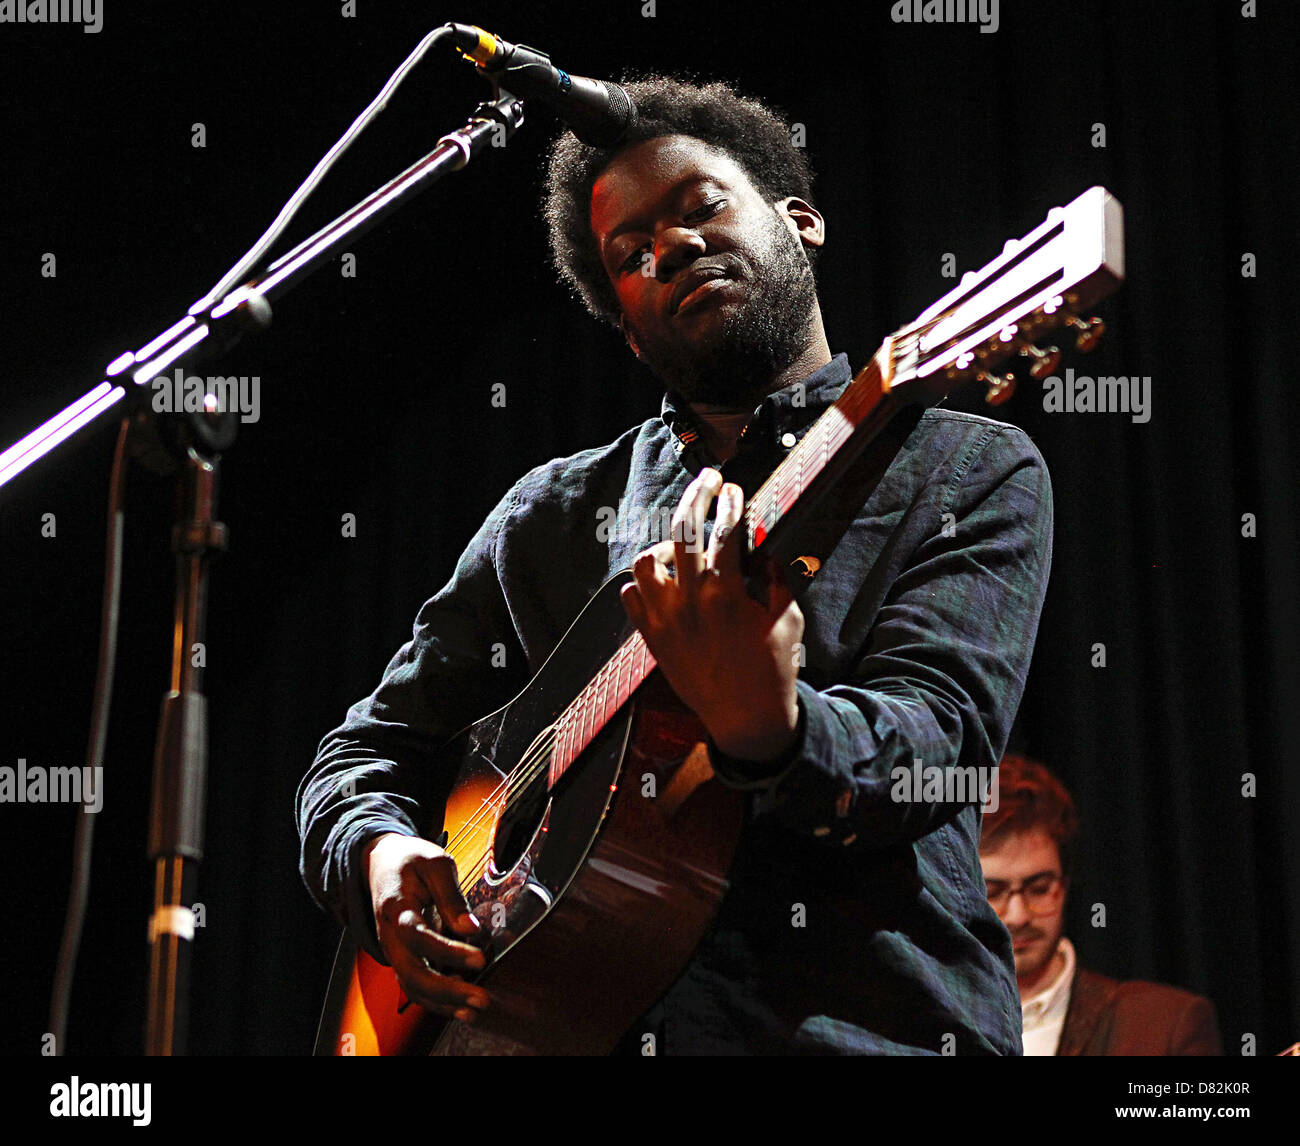 BBC's Sound of 2012 winner Michael Kiwanuka performing on stage at the Islington Assembley Hall. London, England - 16.02.12 Stock Photo